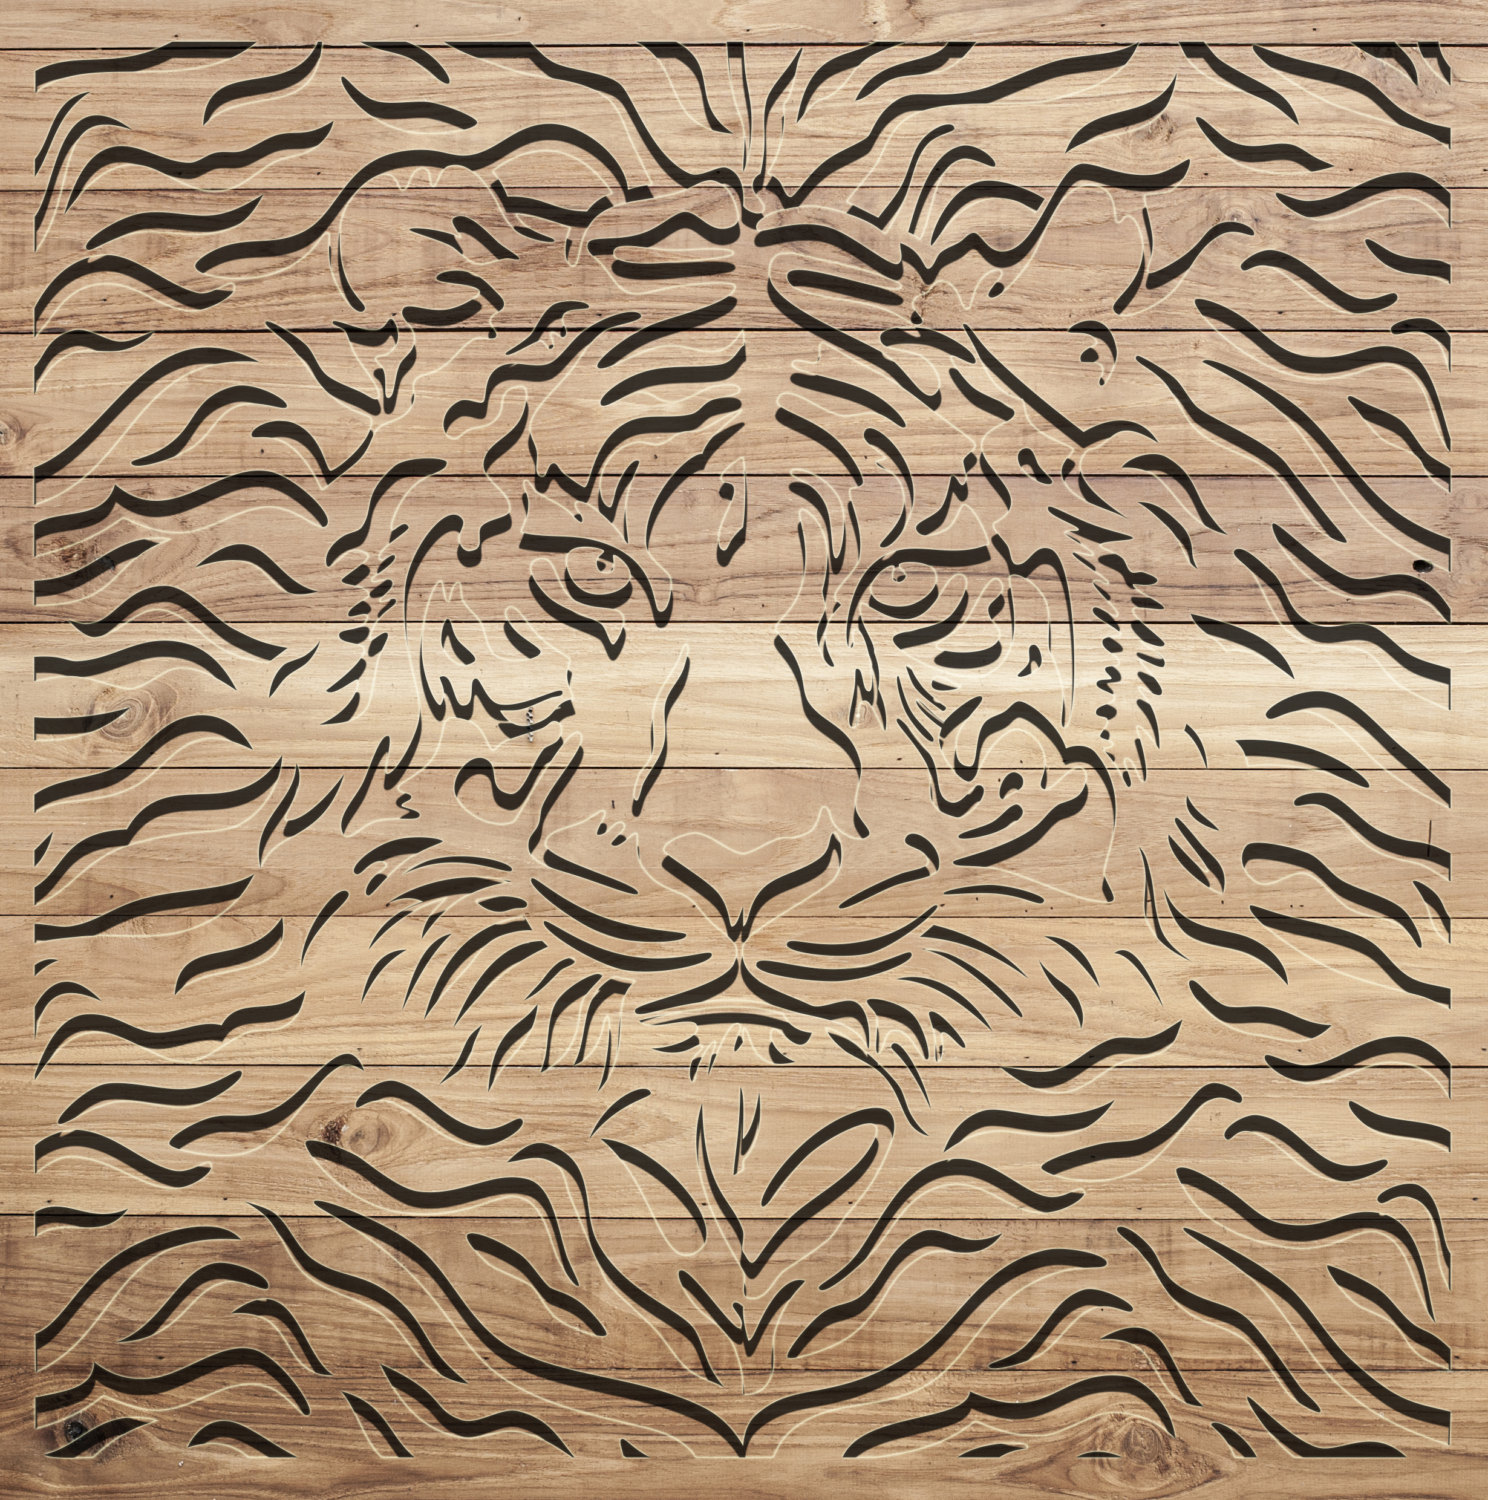 Sumatran Tiger svg #9, Download drawings